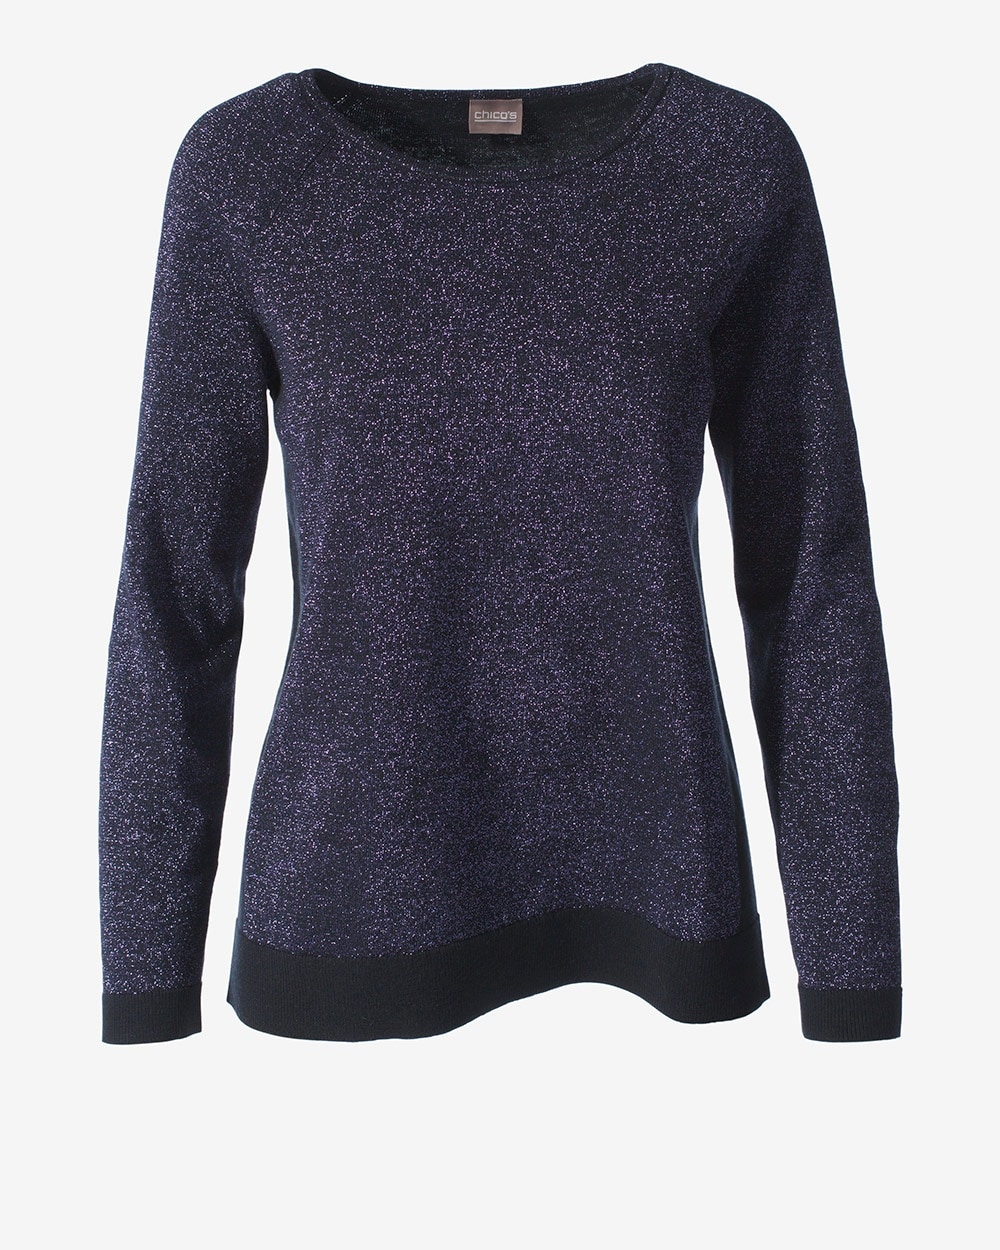 Weekends Colorblock Shine Sweater